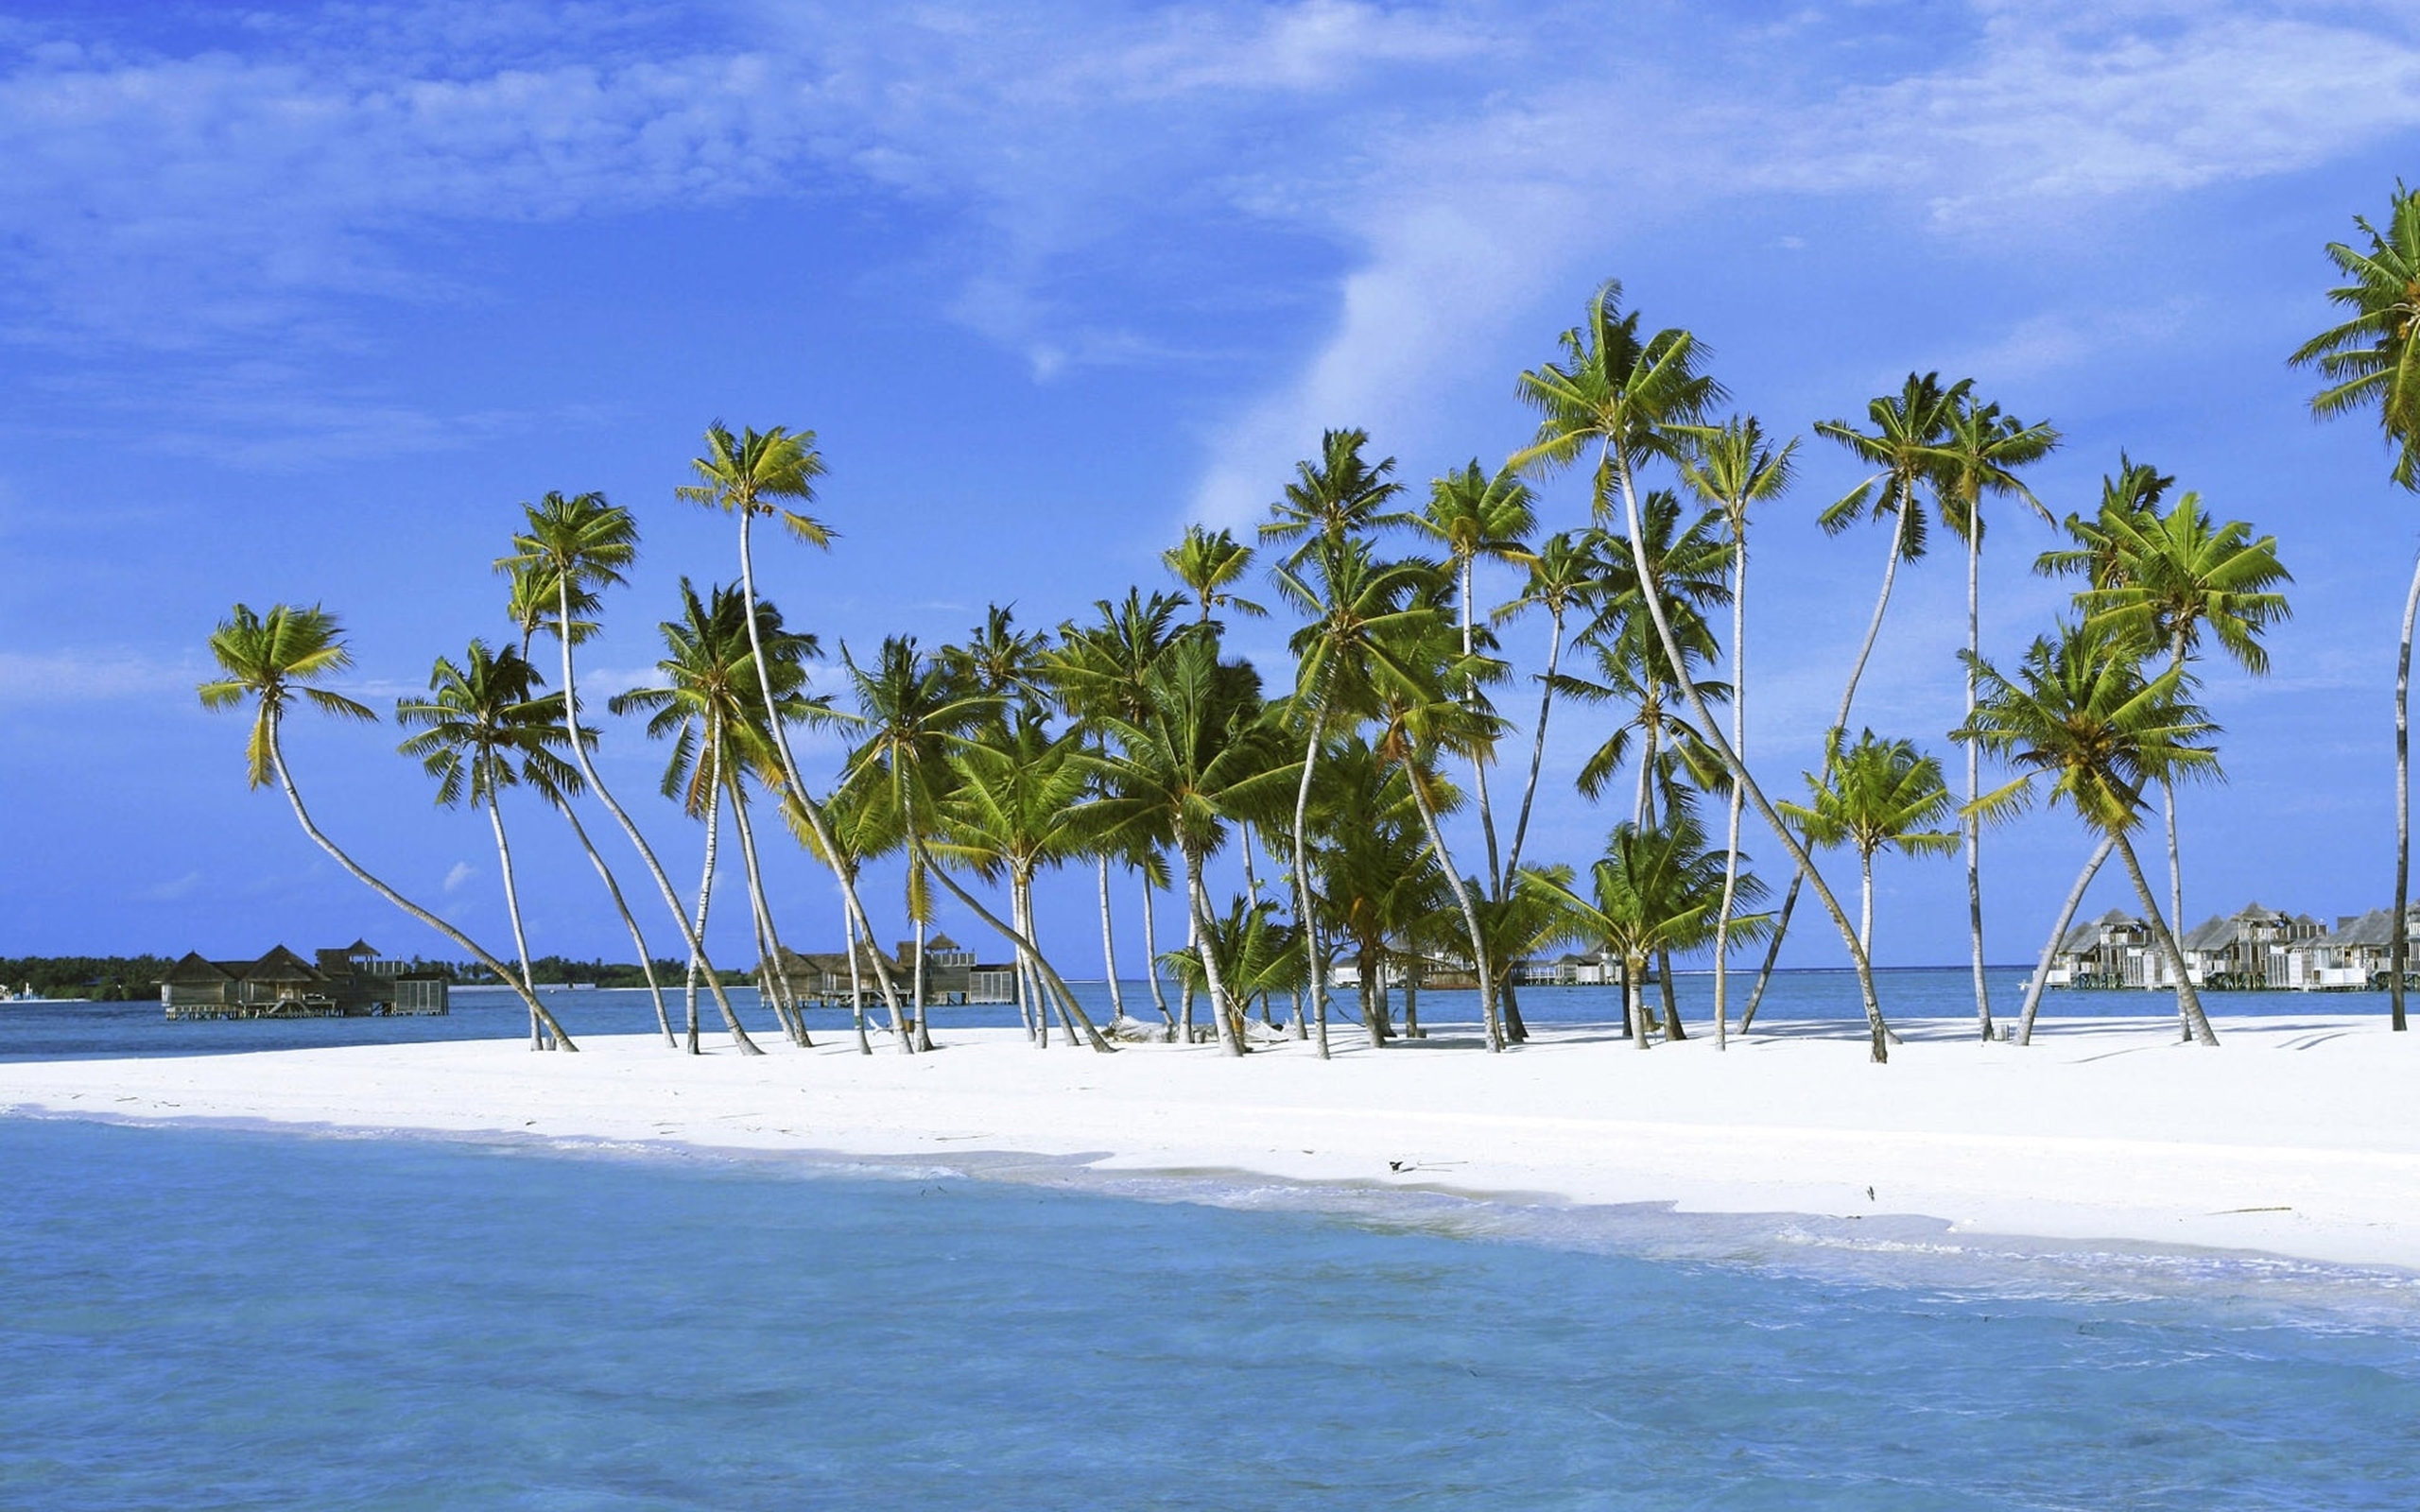 Beach tree. Парадиз остров Карибского моря. Гавайи Ямайка. Карибское море Доминикана. Пляж.